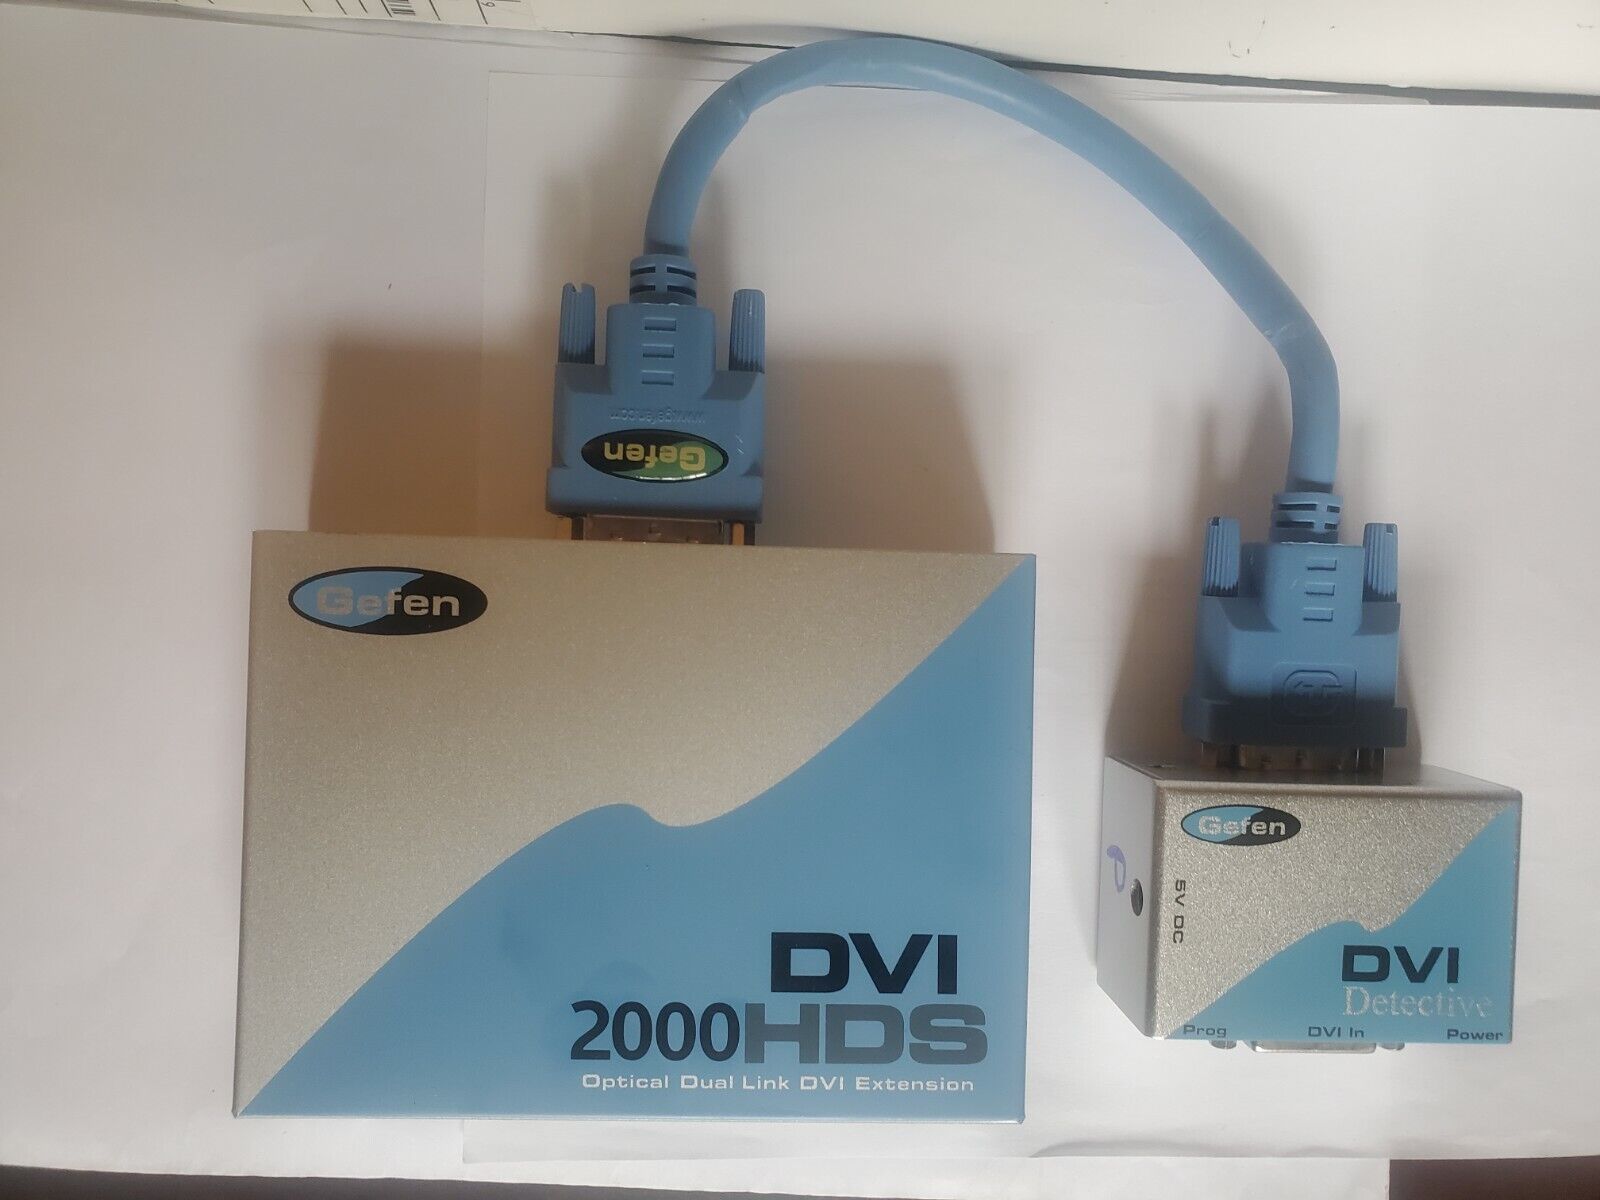 Gefen DVI 2000HDS Optical Dual Link DVI Extension && Gefen DVI Detective && Cord